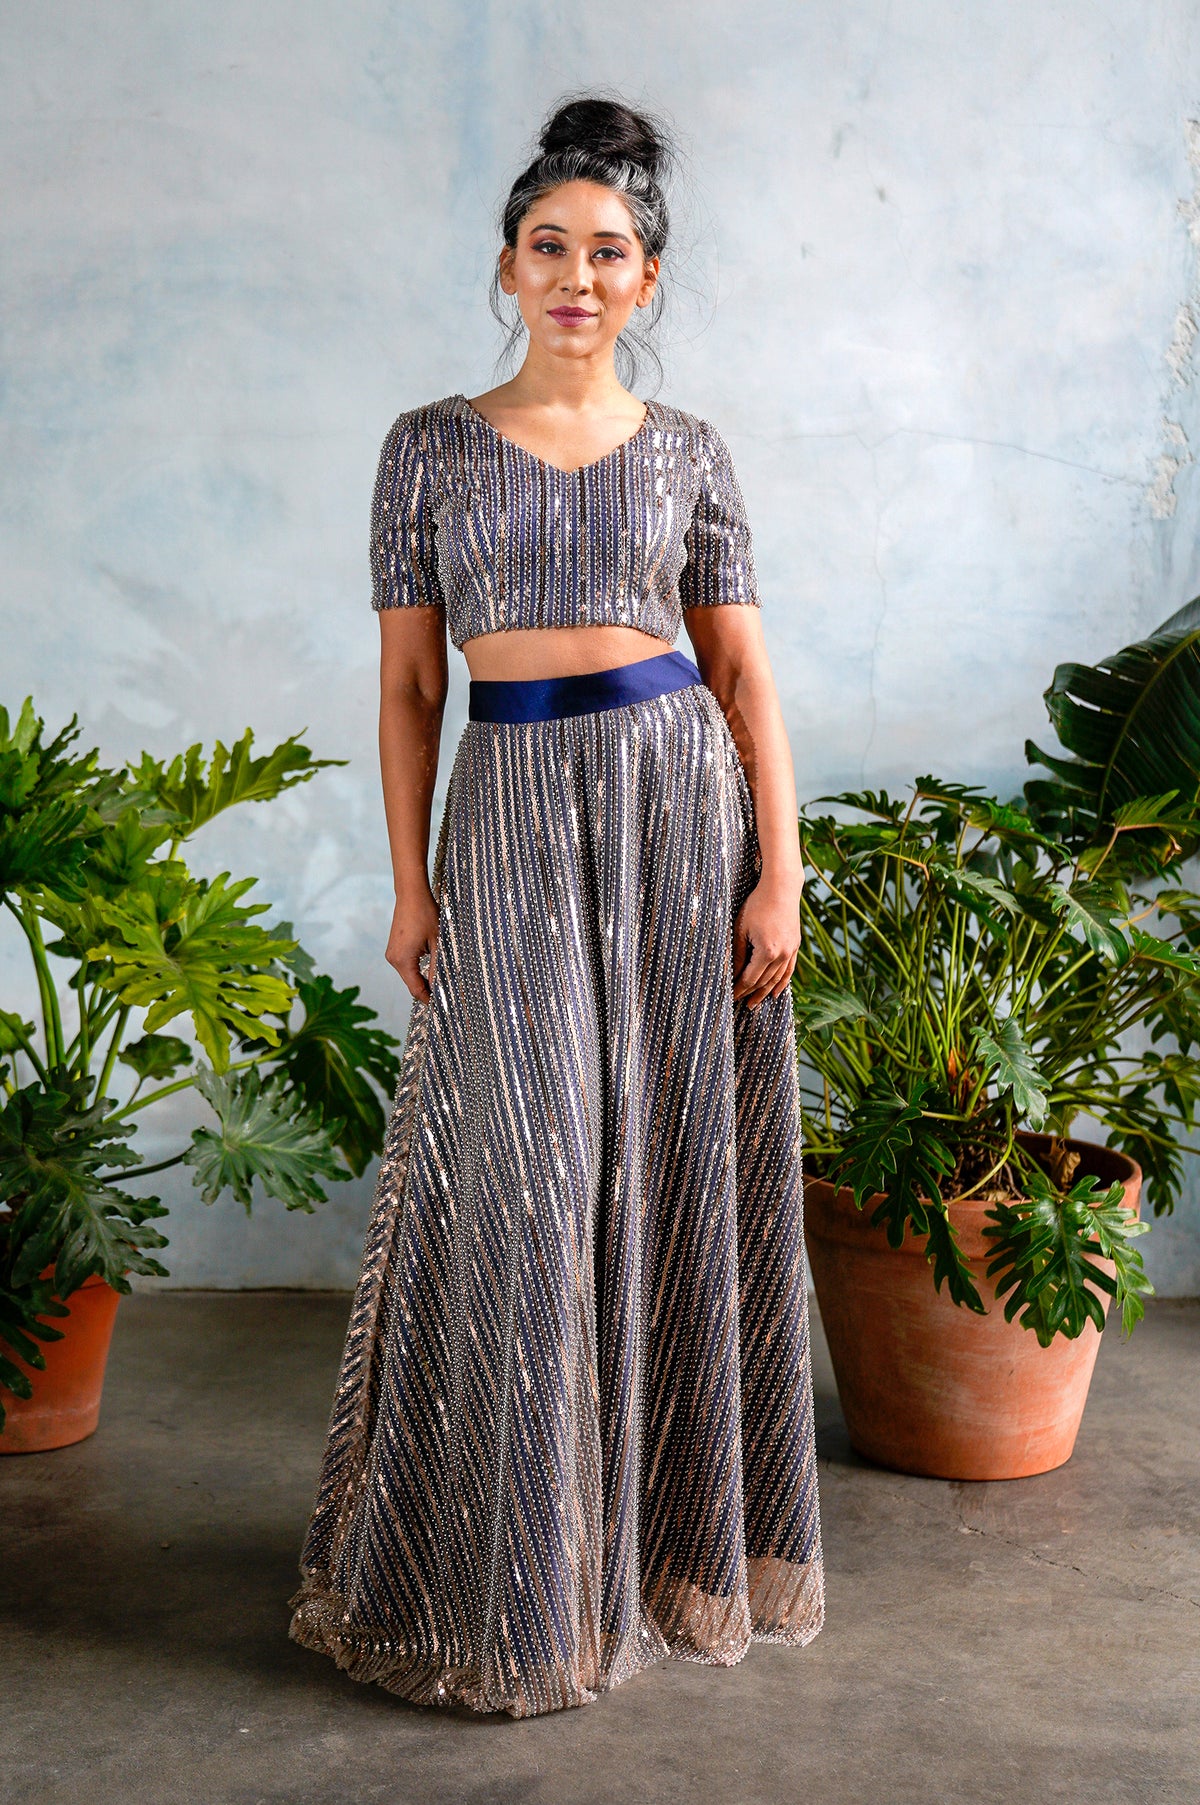 SANYA Striped Beaded Sequin Top - Front View - Harleen Kaur Womenswear - Sample Sale